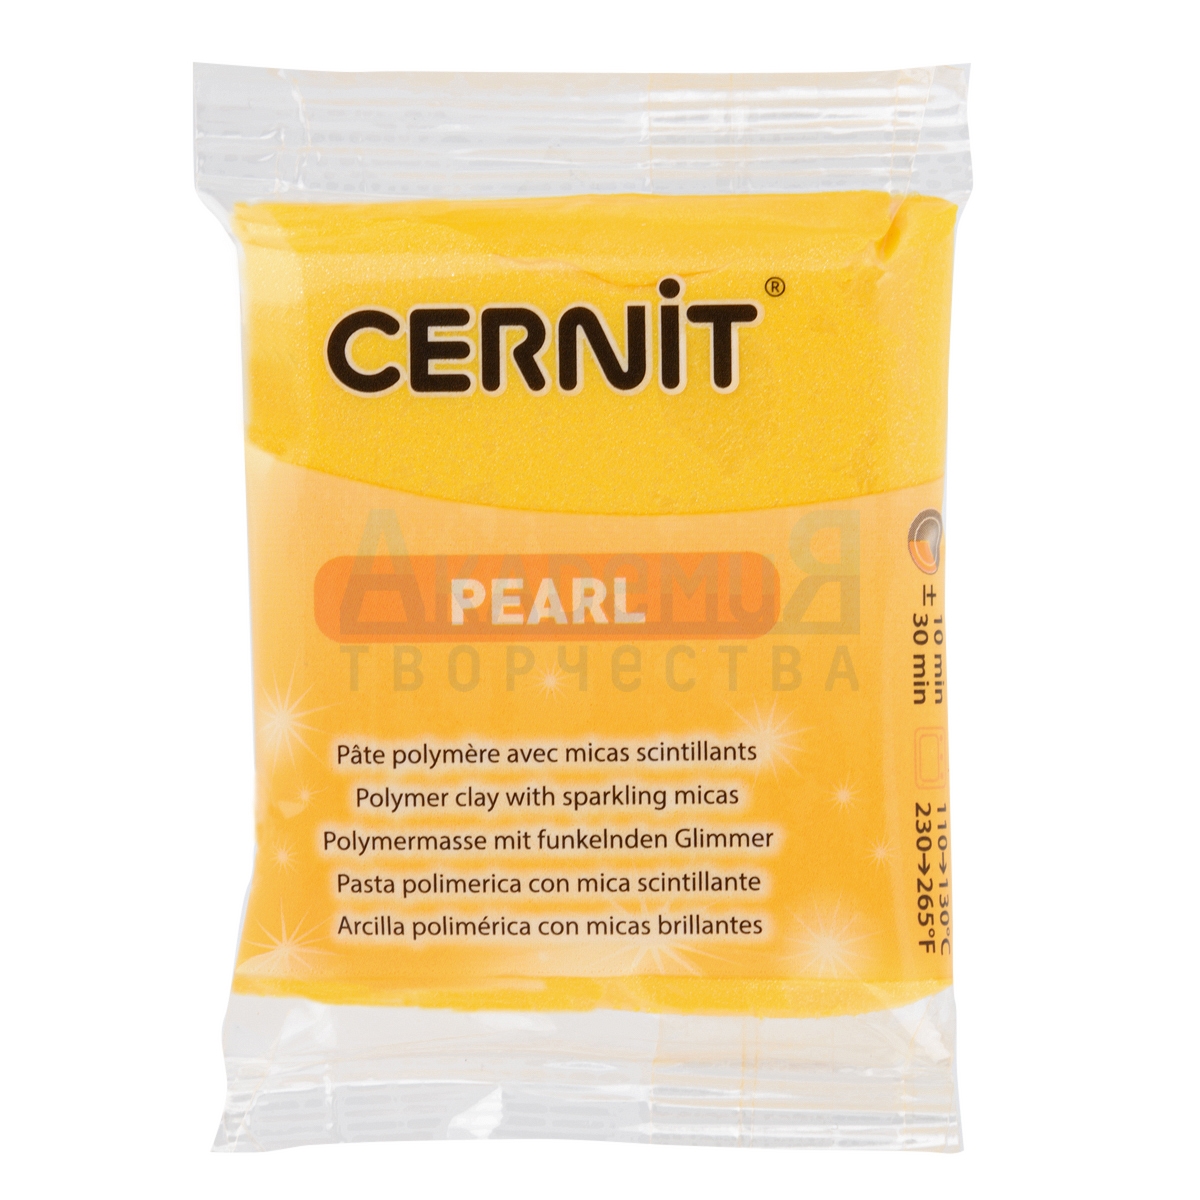 Cernit Pearl полимерная глина 700 цвет желтый 56 гр.